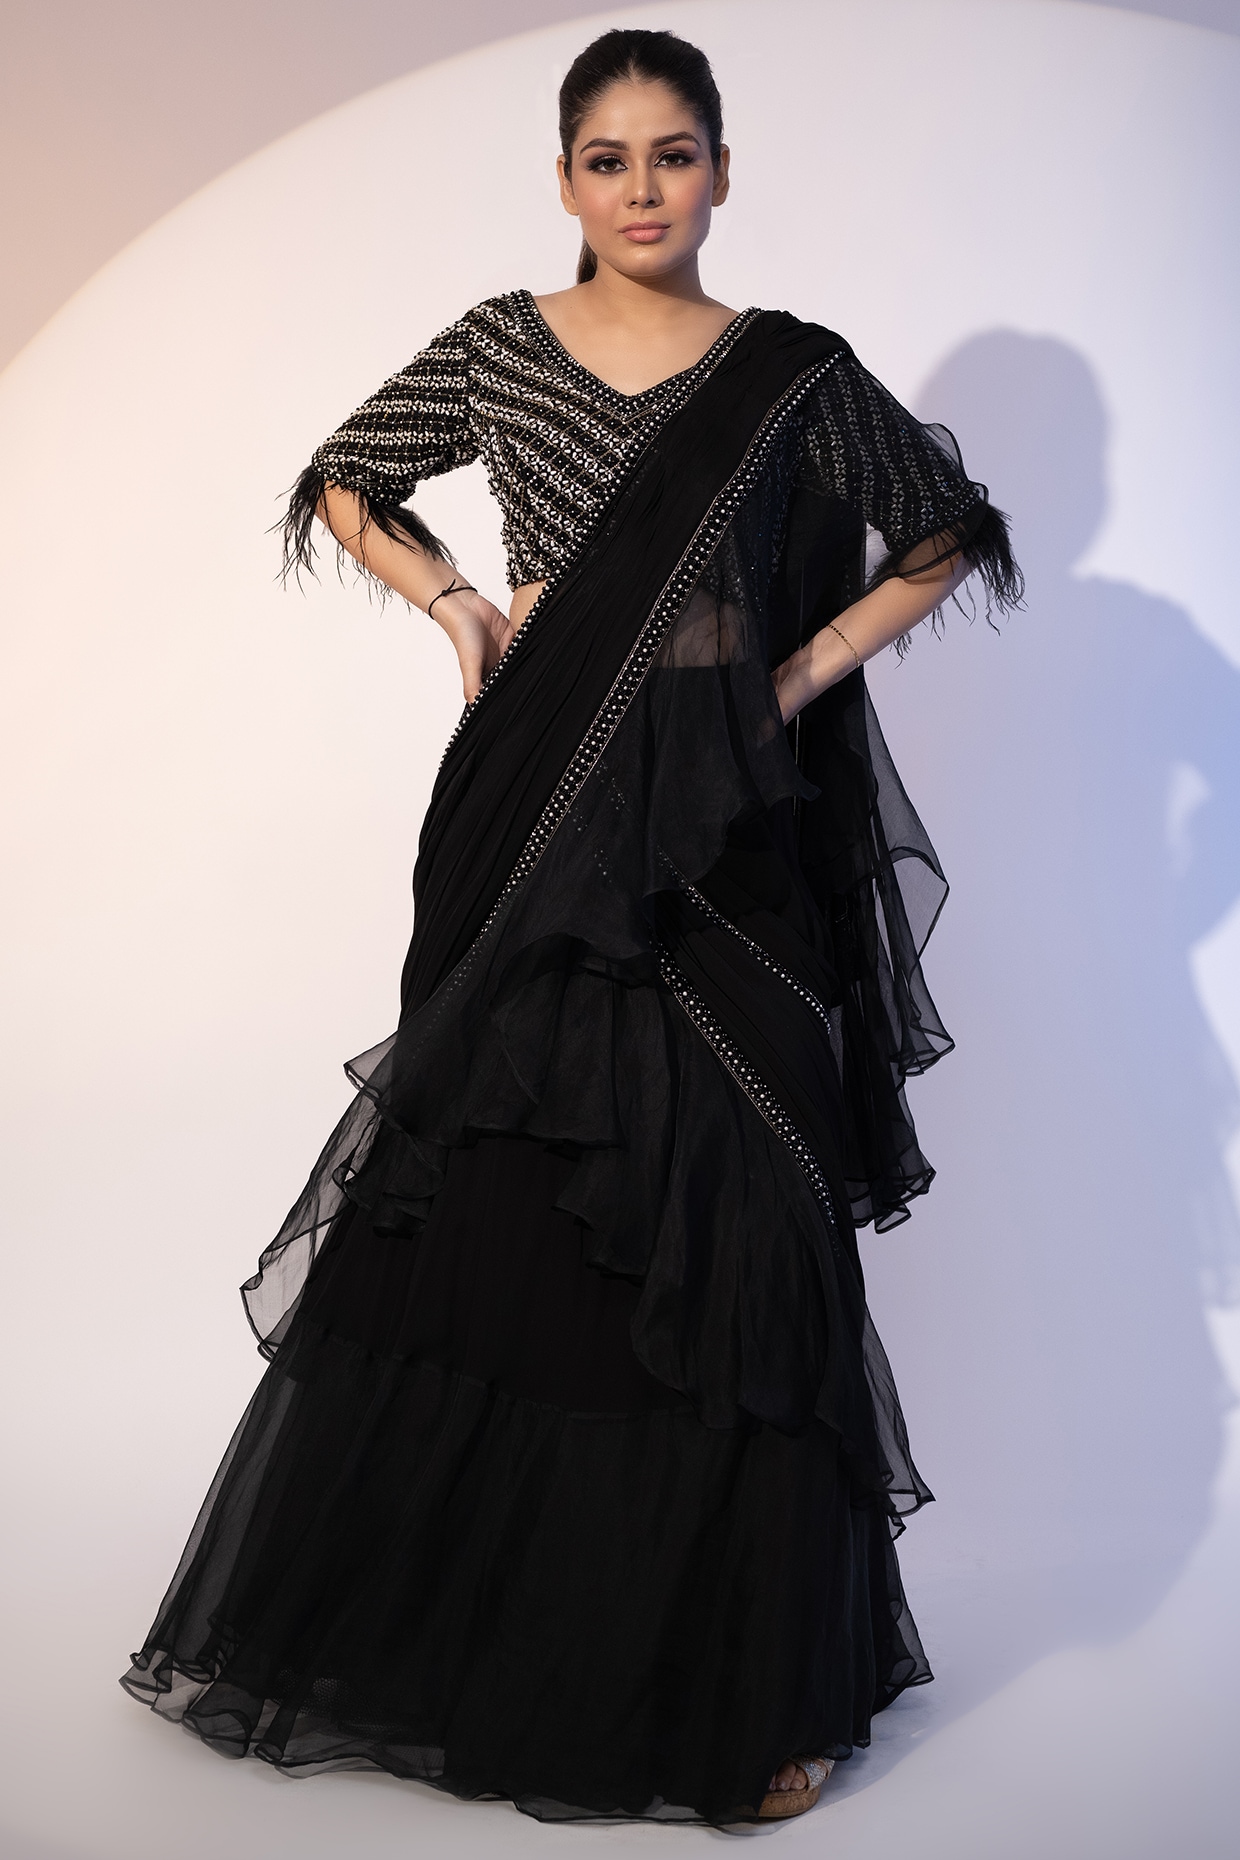 Ruffle Saree Designs - Fresh Look Fashion - Medium